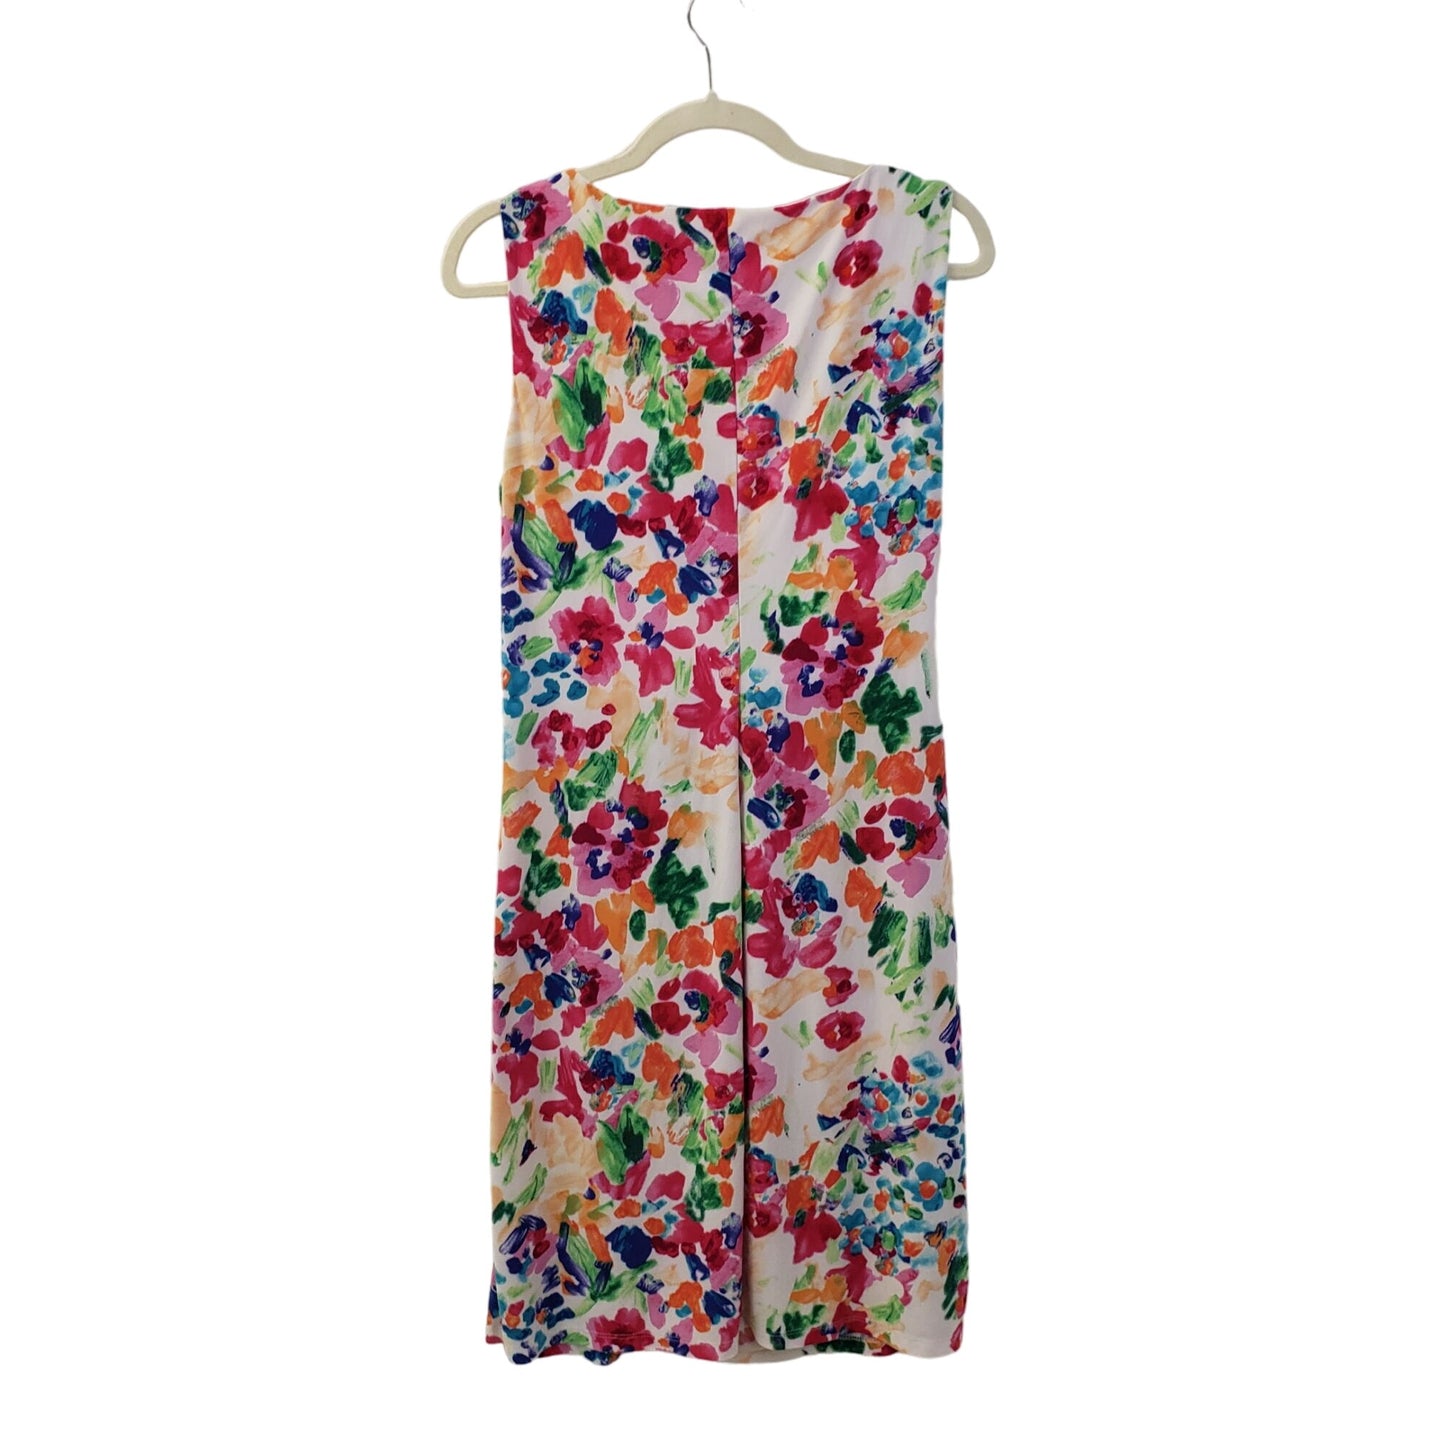 American Living Floral Drape Top Dress Size 16